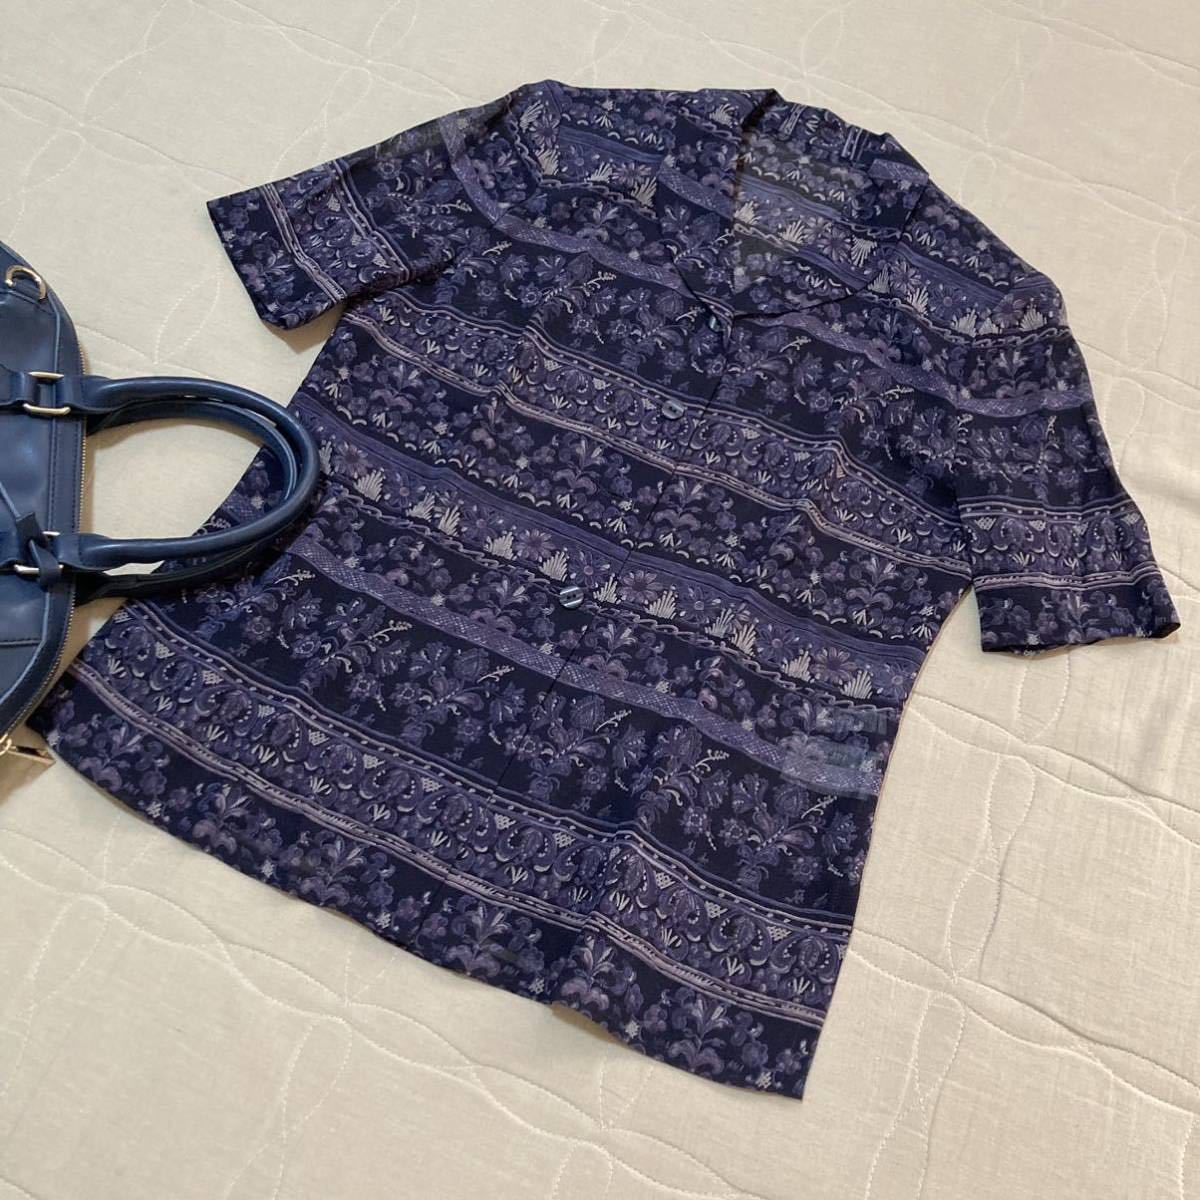  Leilian 9* beautiful goods * navy group skirt . wonderful total pattern setup * size 9